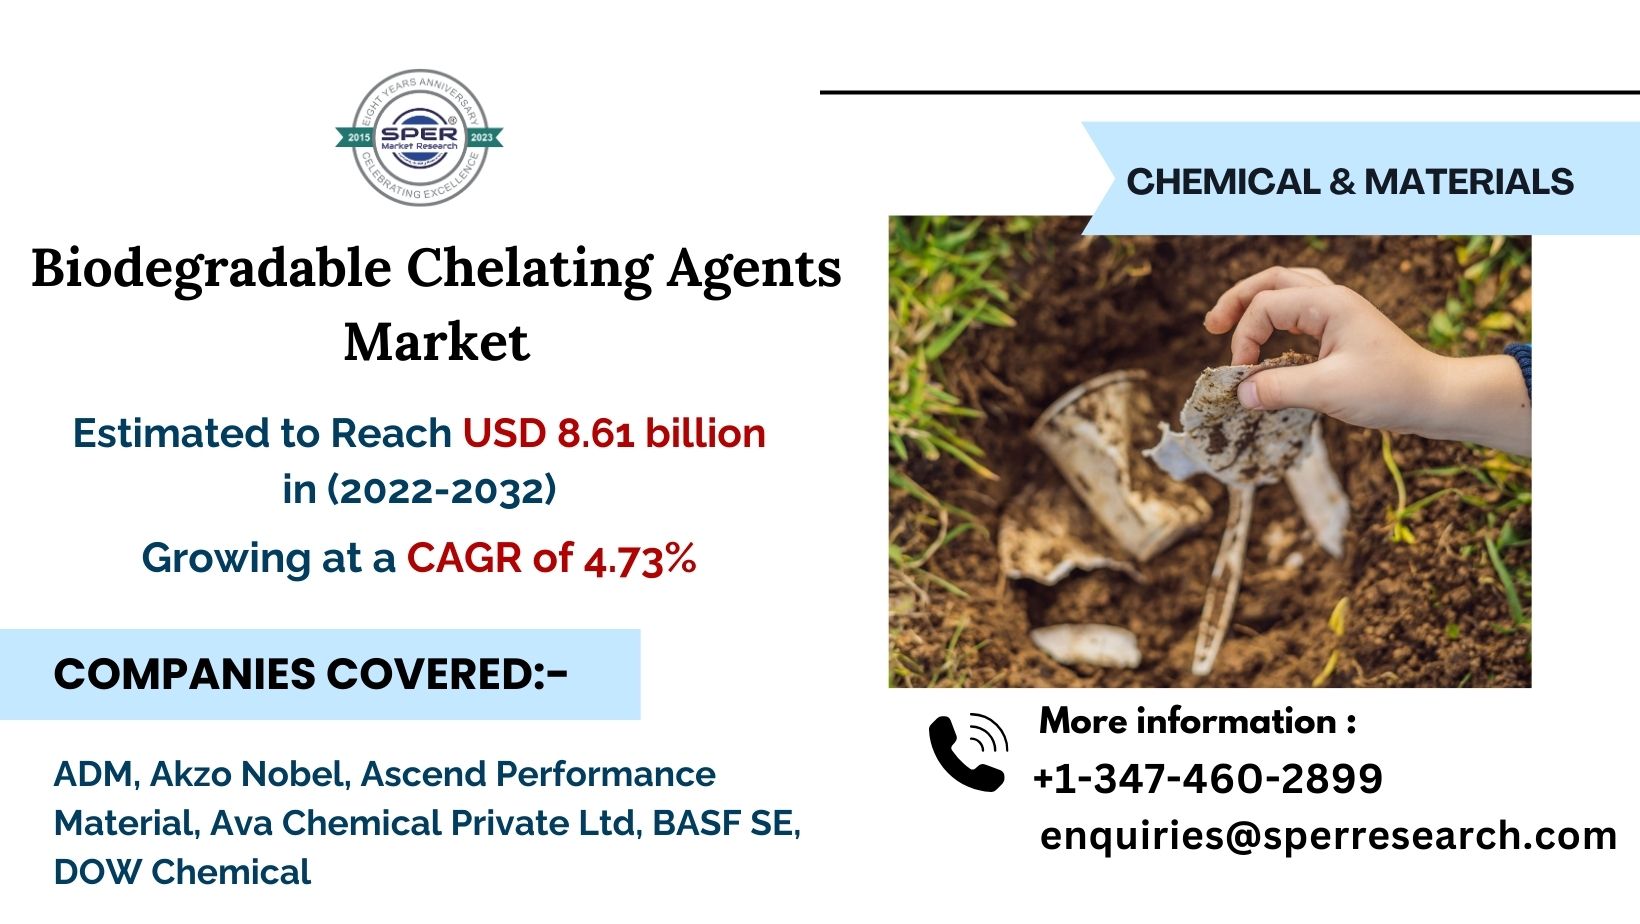 Biodegradable Chelating Agents Market